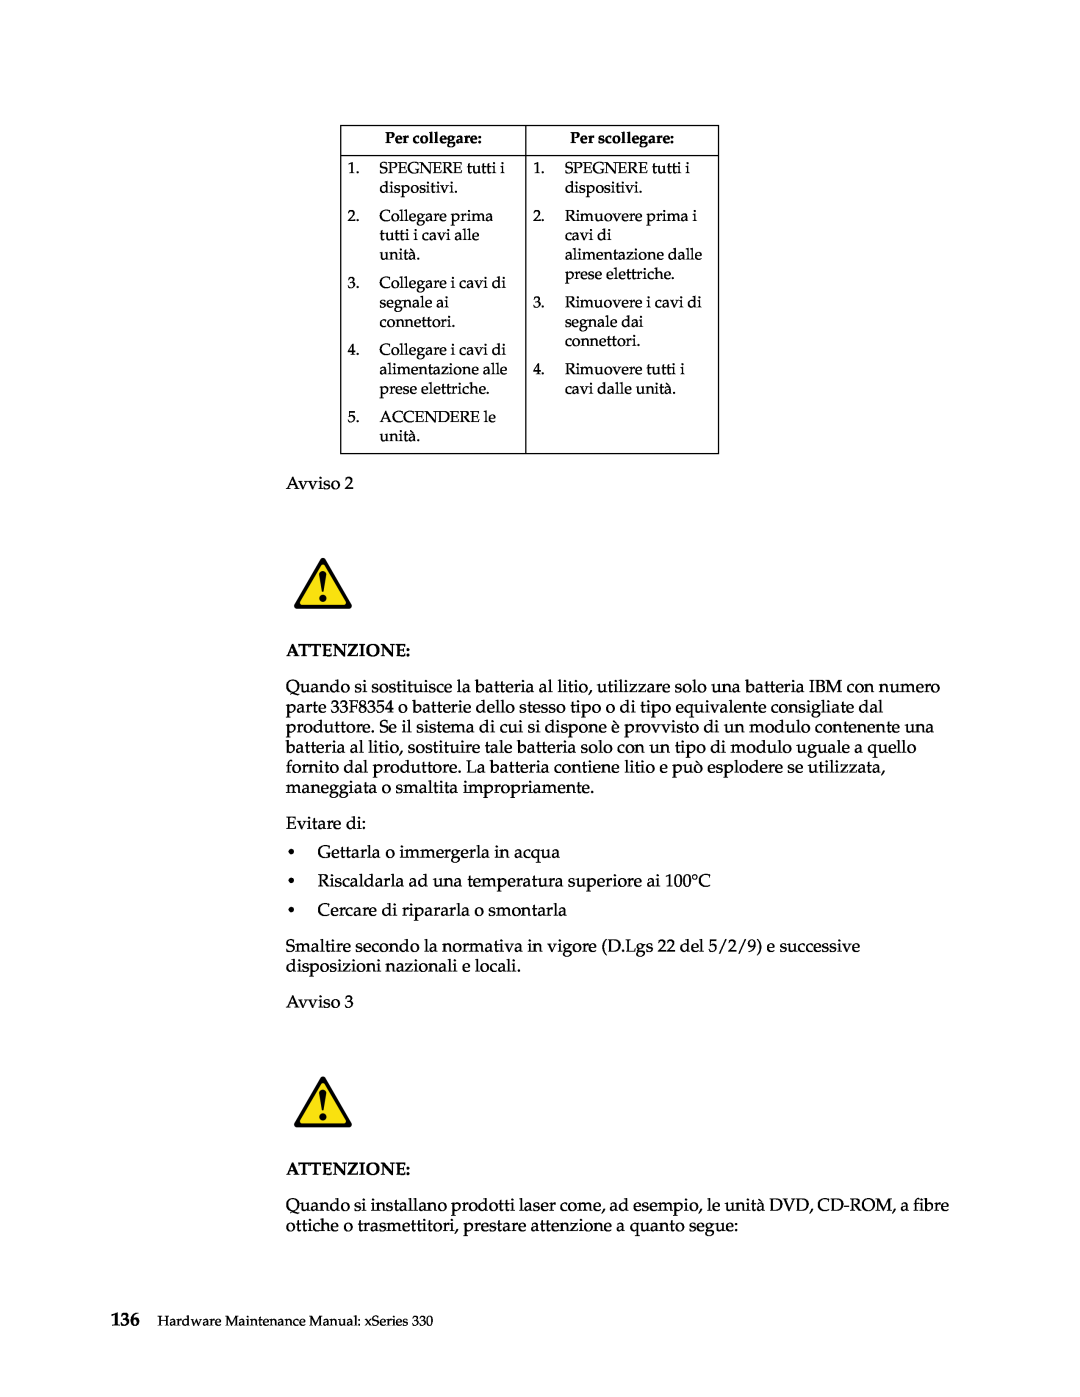 IBM xSeries 330 manual Attenzione 